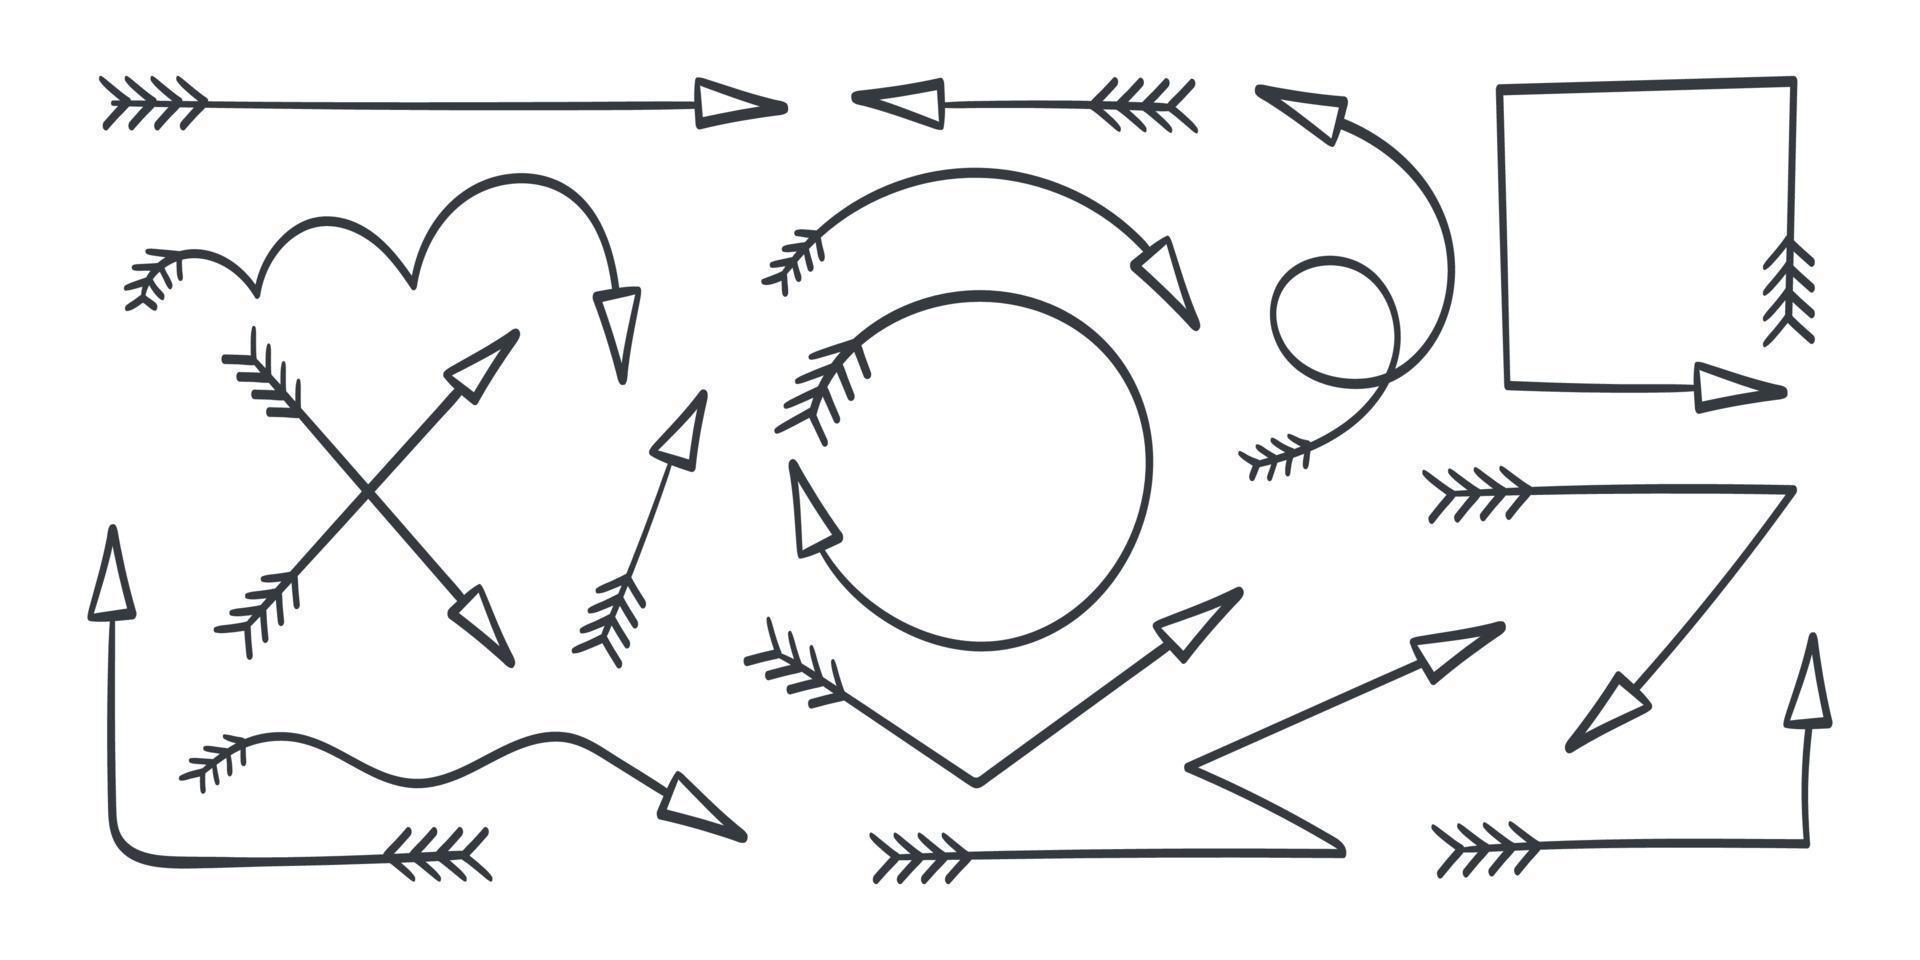 un conjunto de flechas dibujadas a mano. flechas vectoriales conjunto de flechas diferentes. ilustración vectorial vector